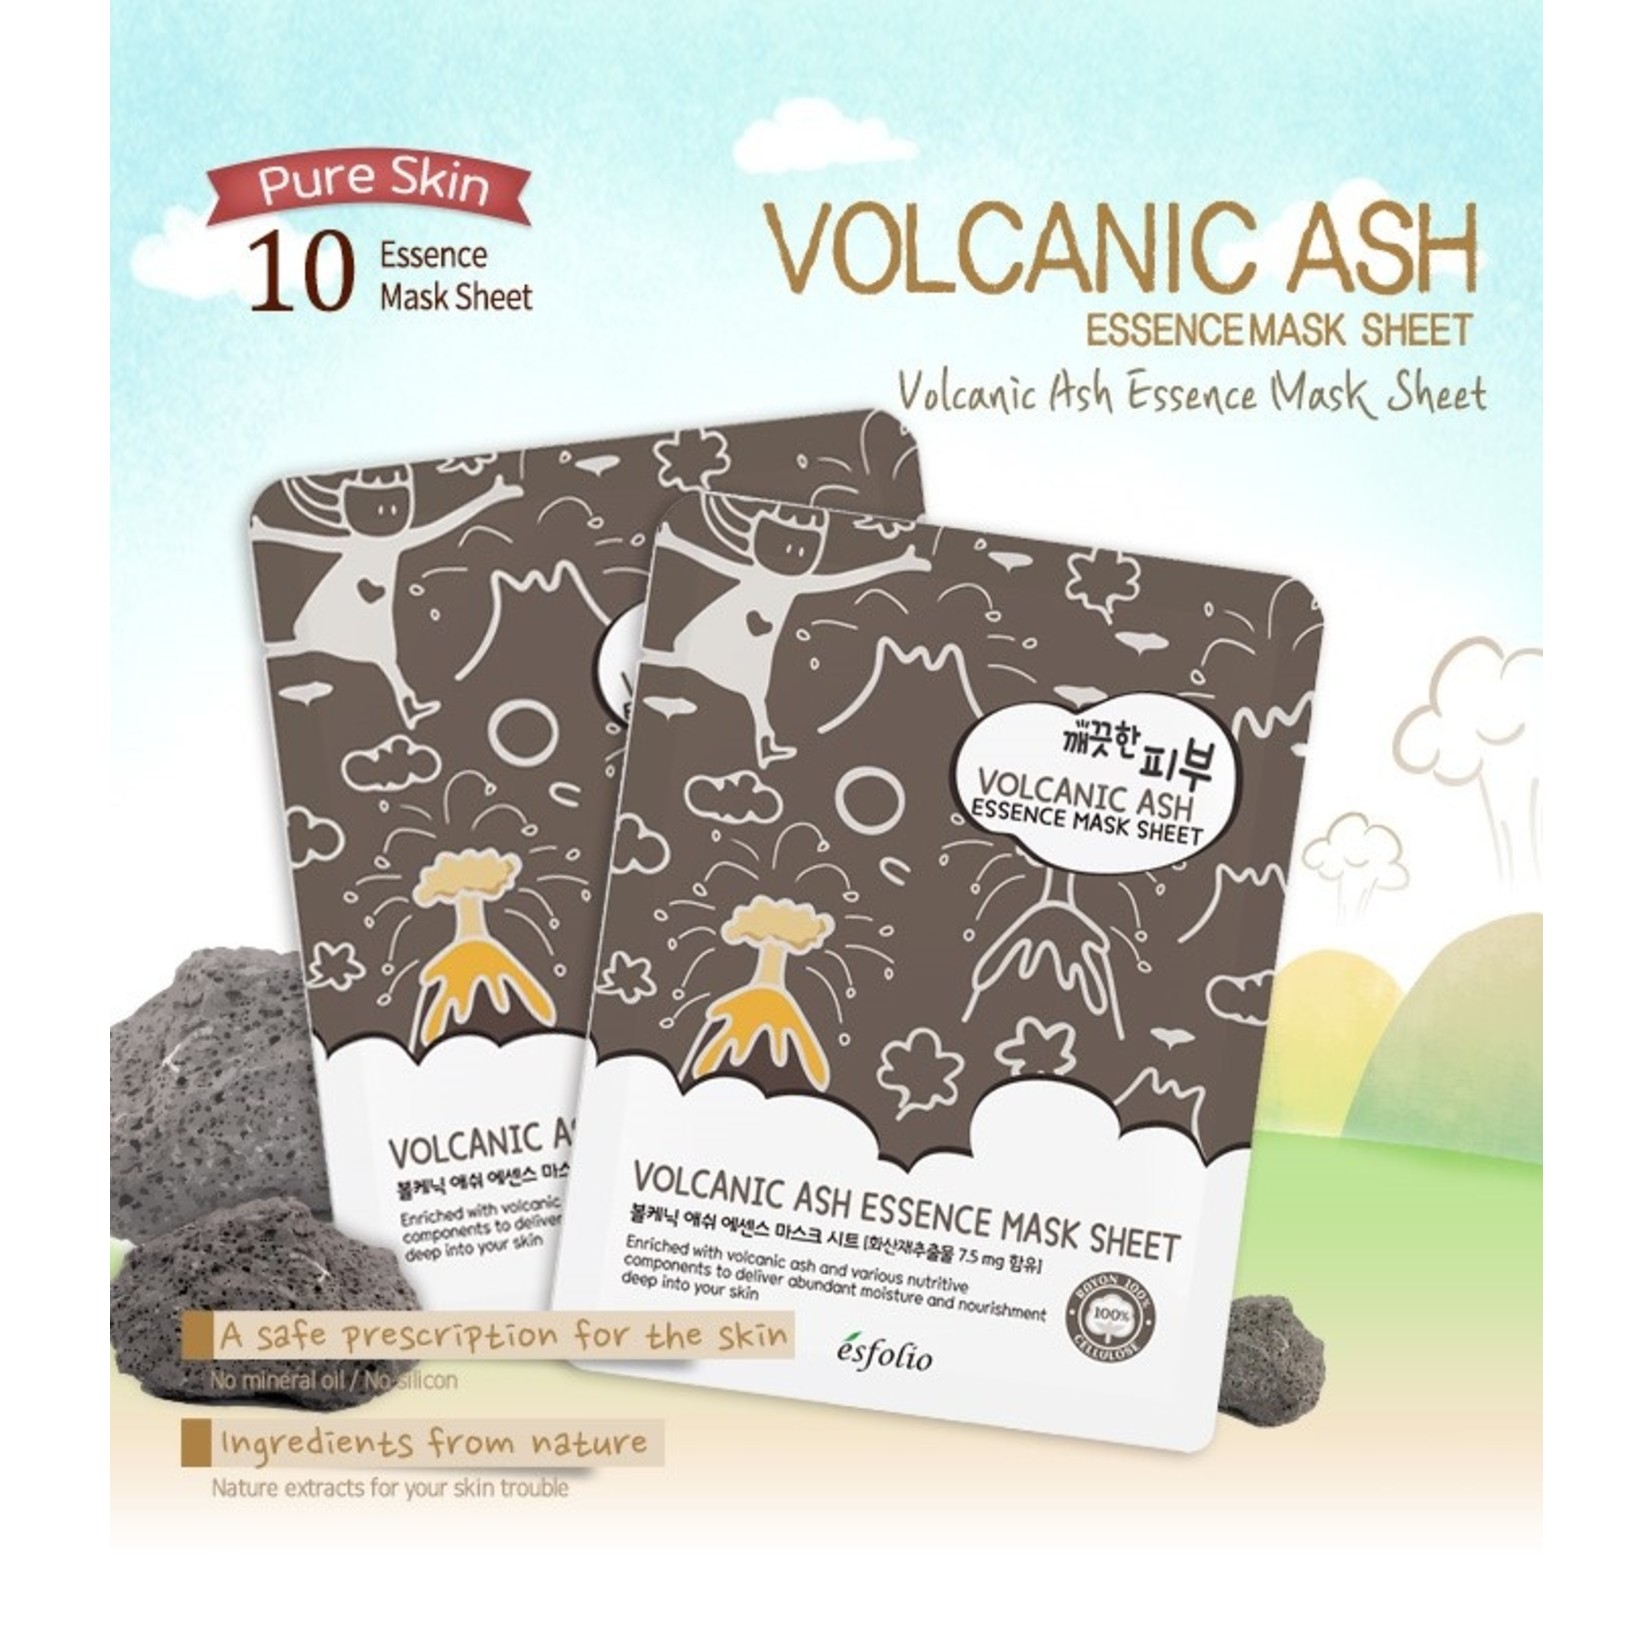 esfolio Pure Skin Volcanic Ash Essence Mask Sheet